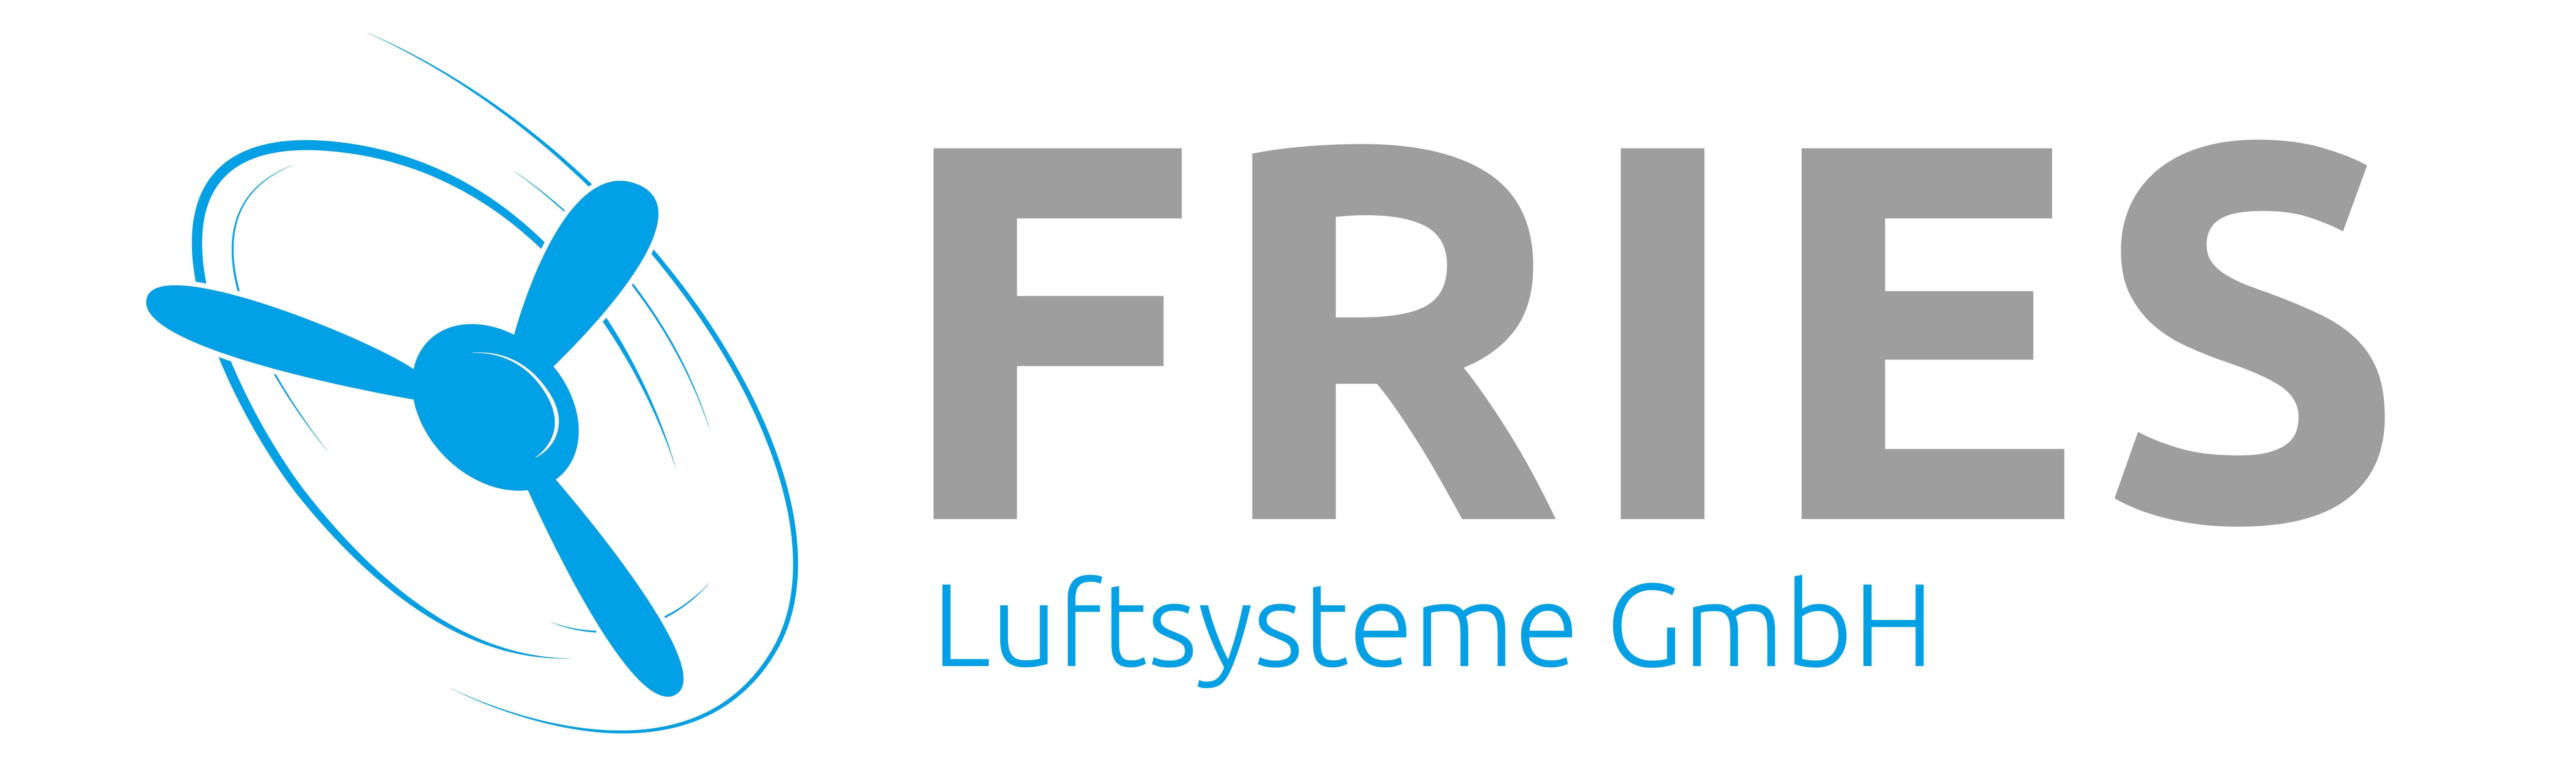 Fries Luftsysteme GmbH